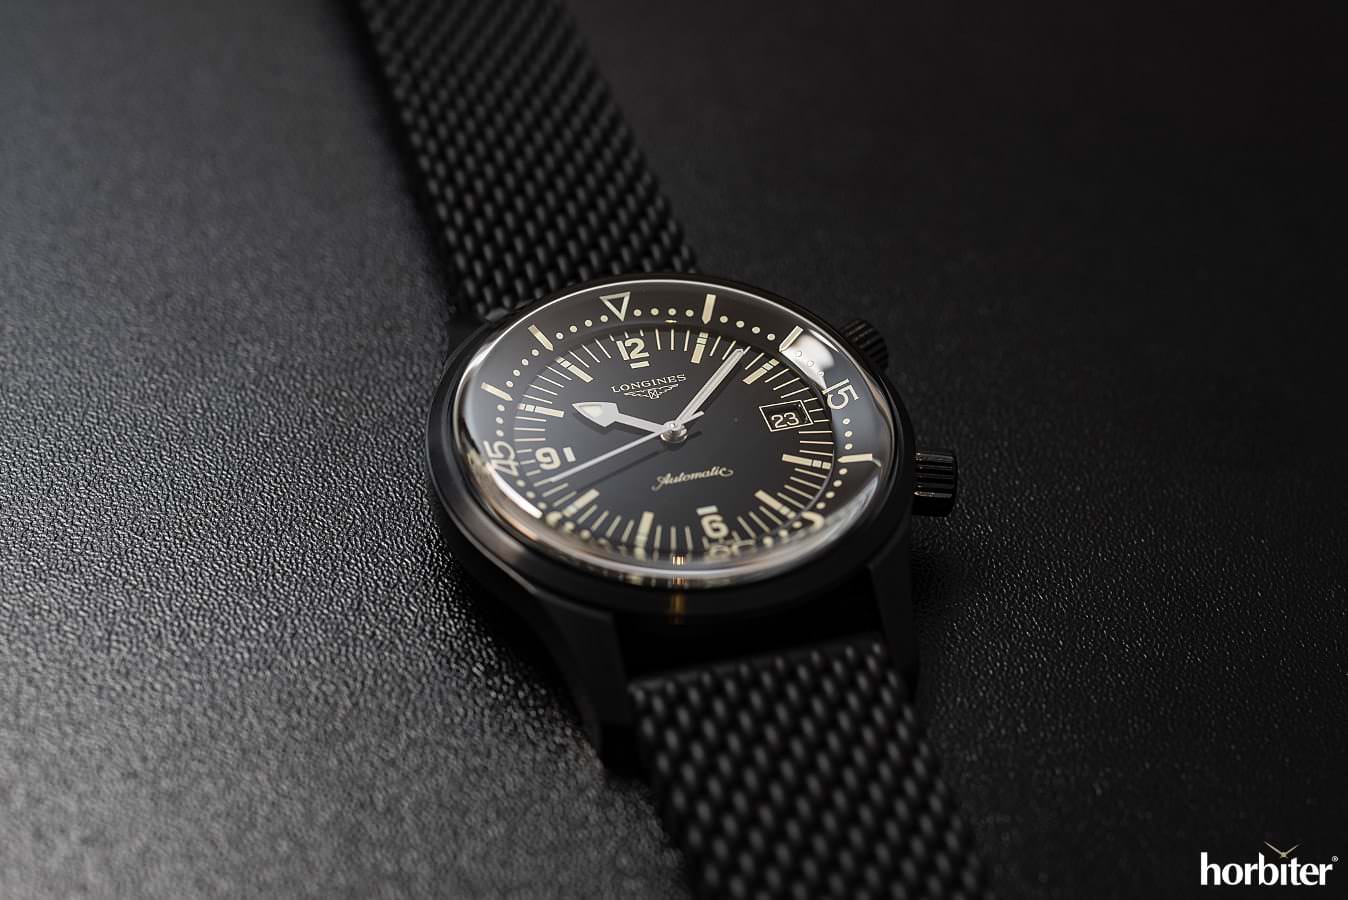 The Longines Heritage Legend Diver Black PVD watch hands-on - Horbiter®